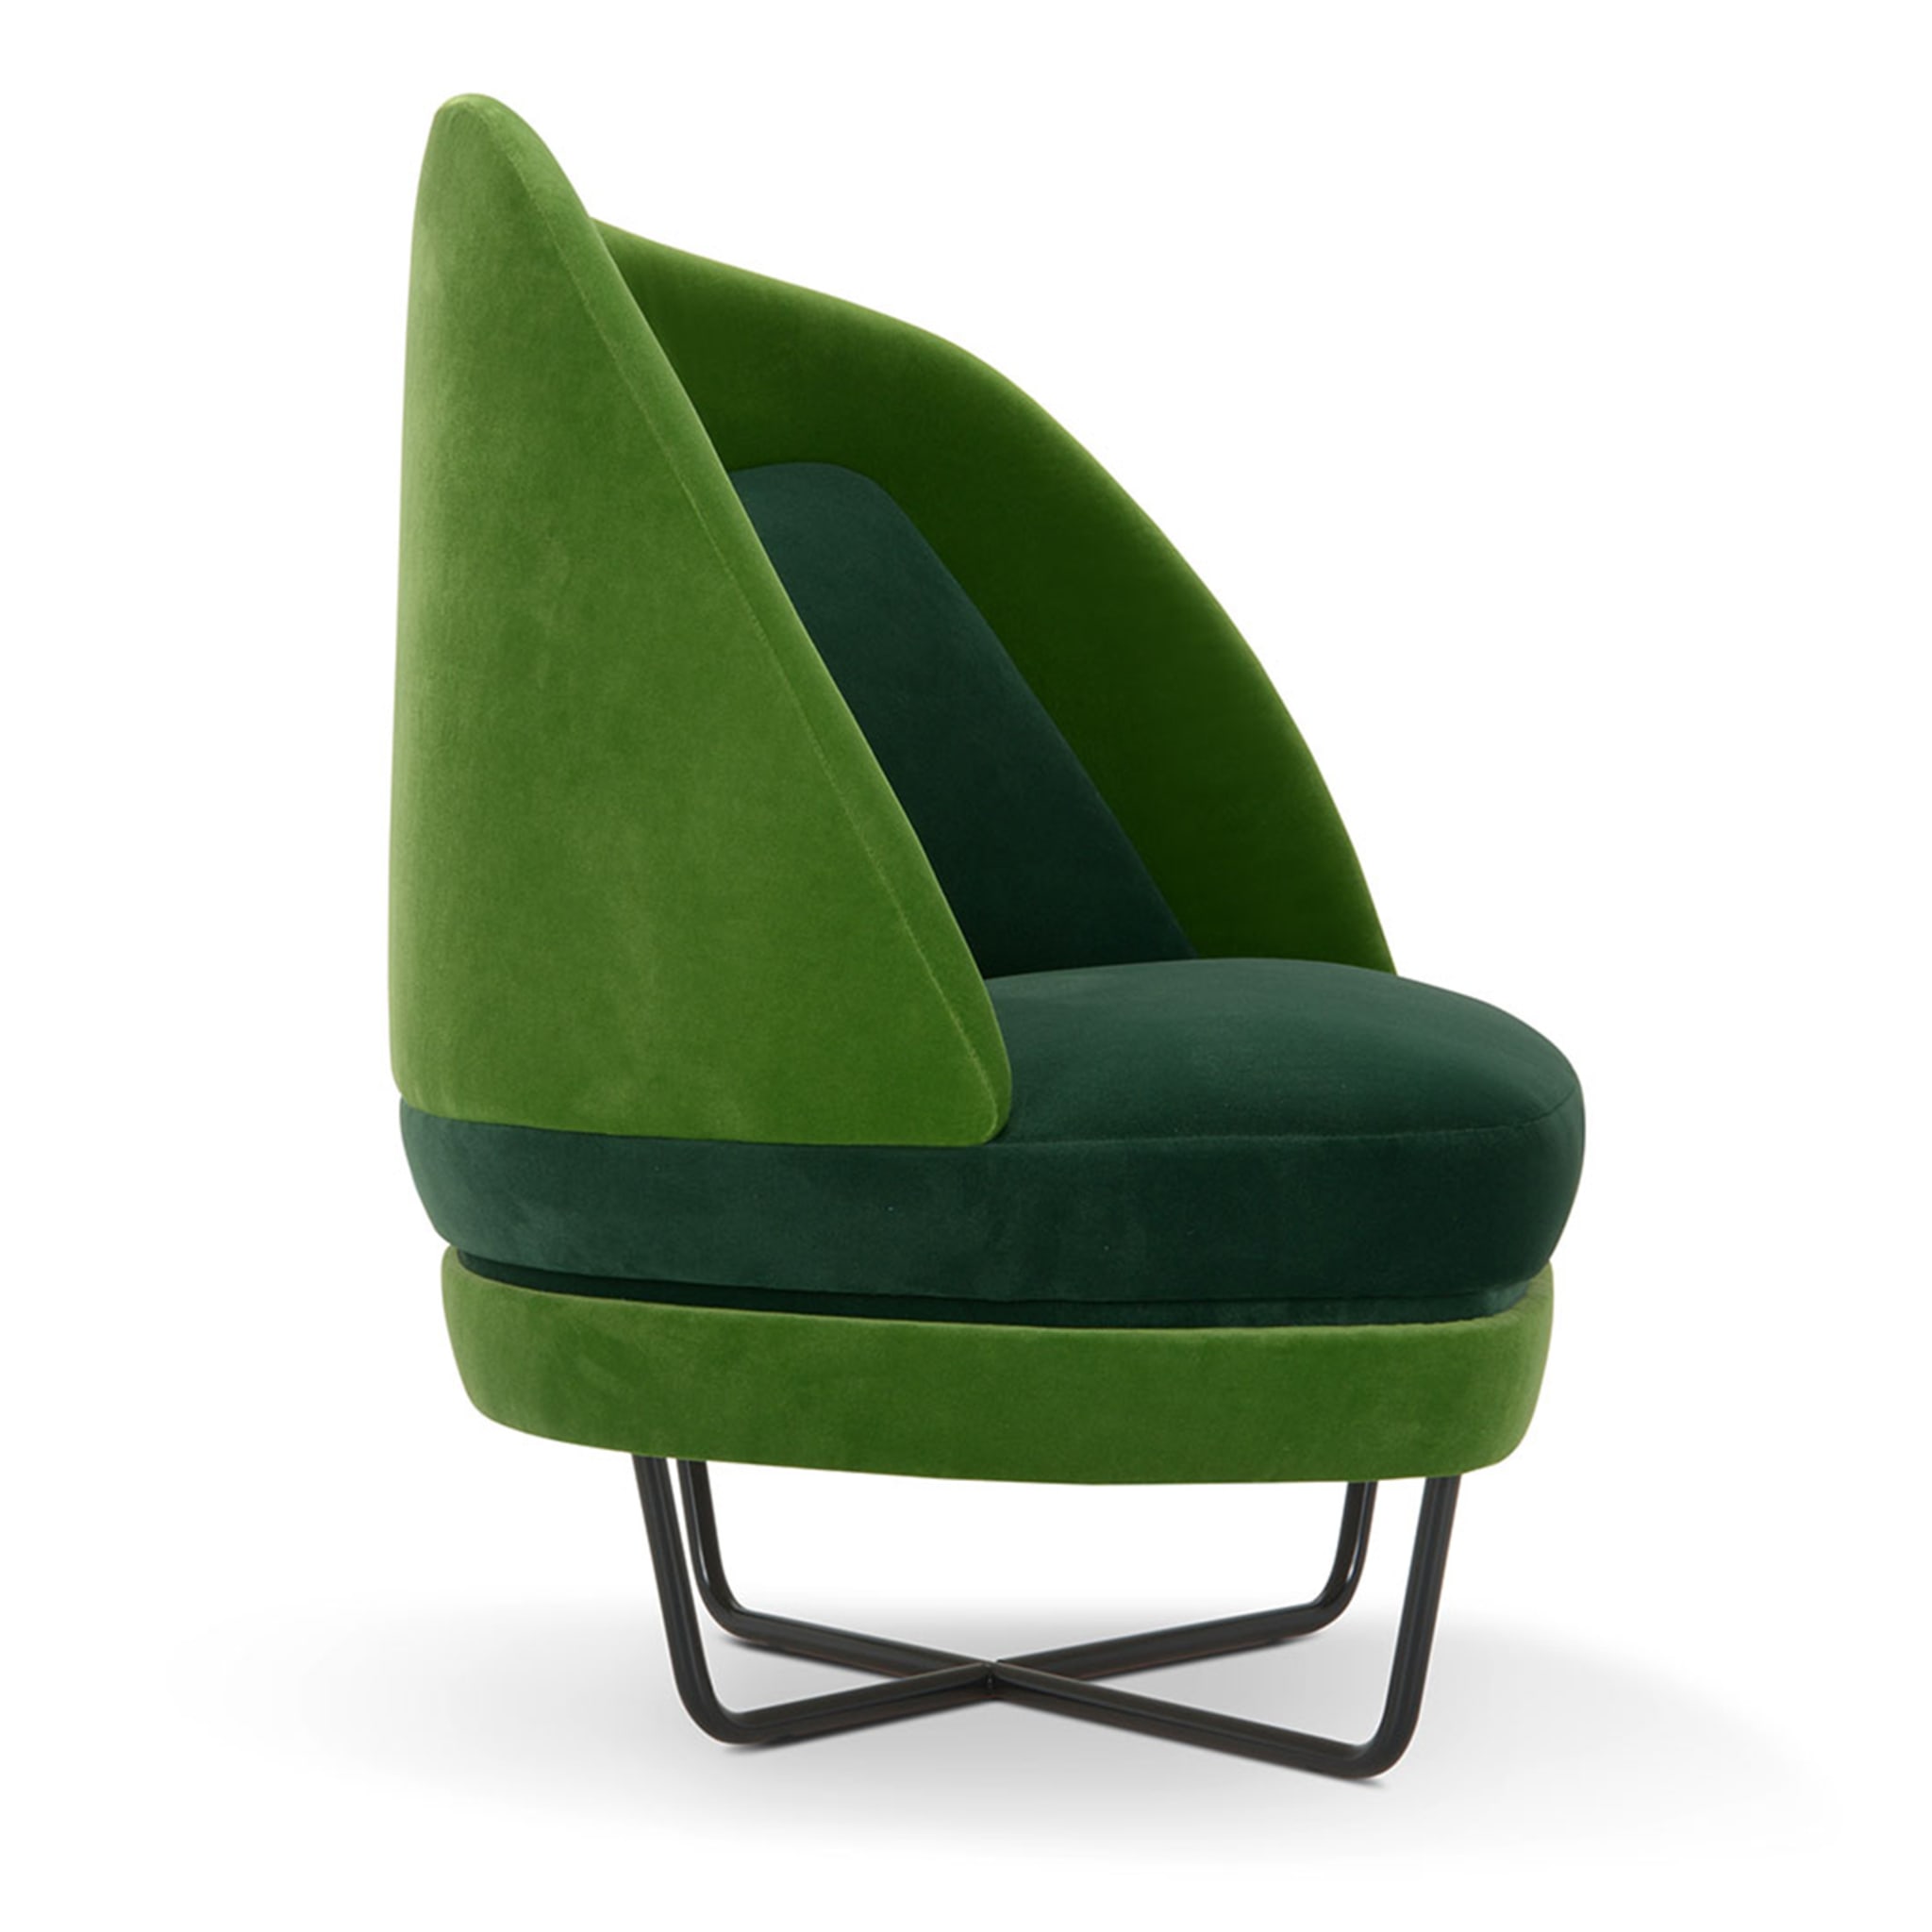 Bixib Green Armchair by Luca Alessandrini - Alternative view 3